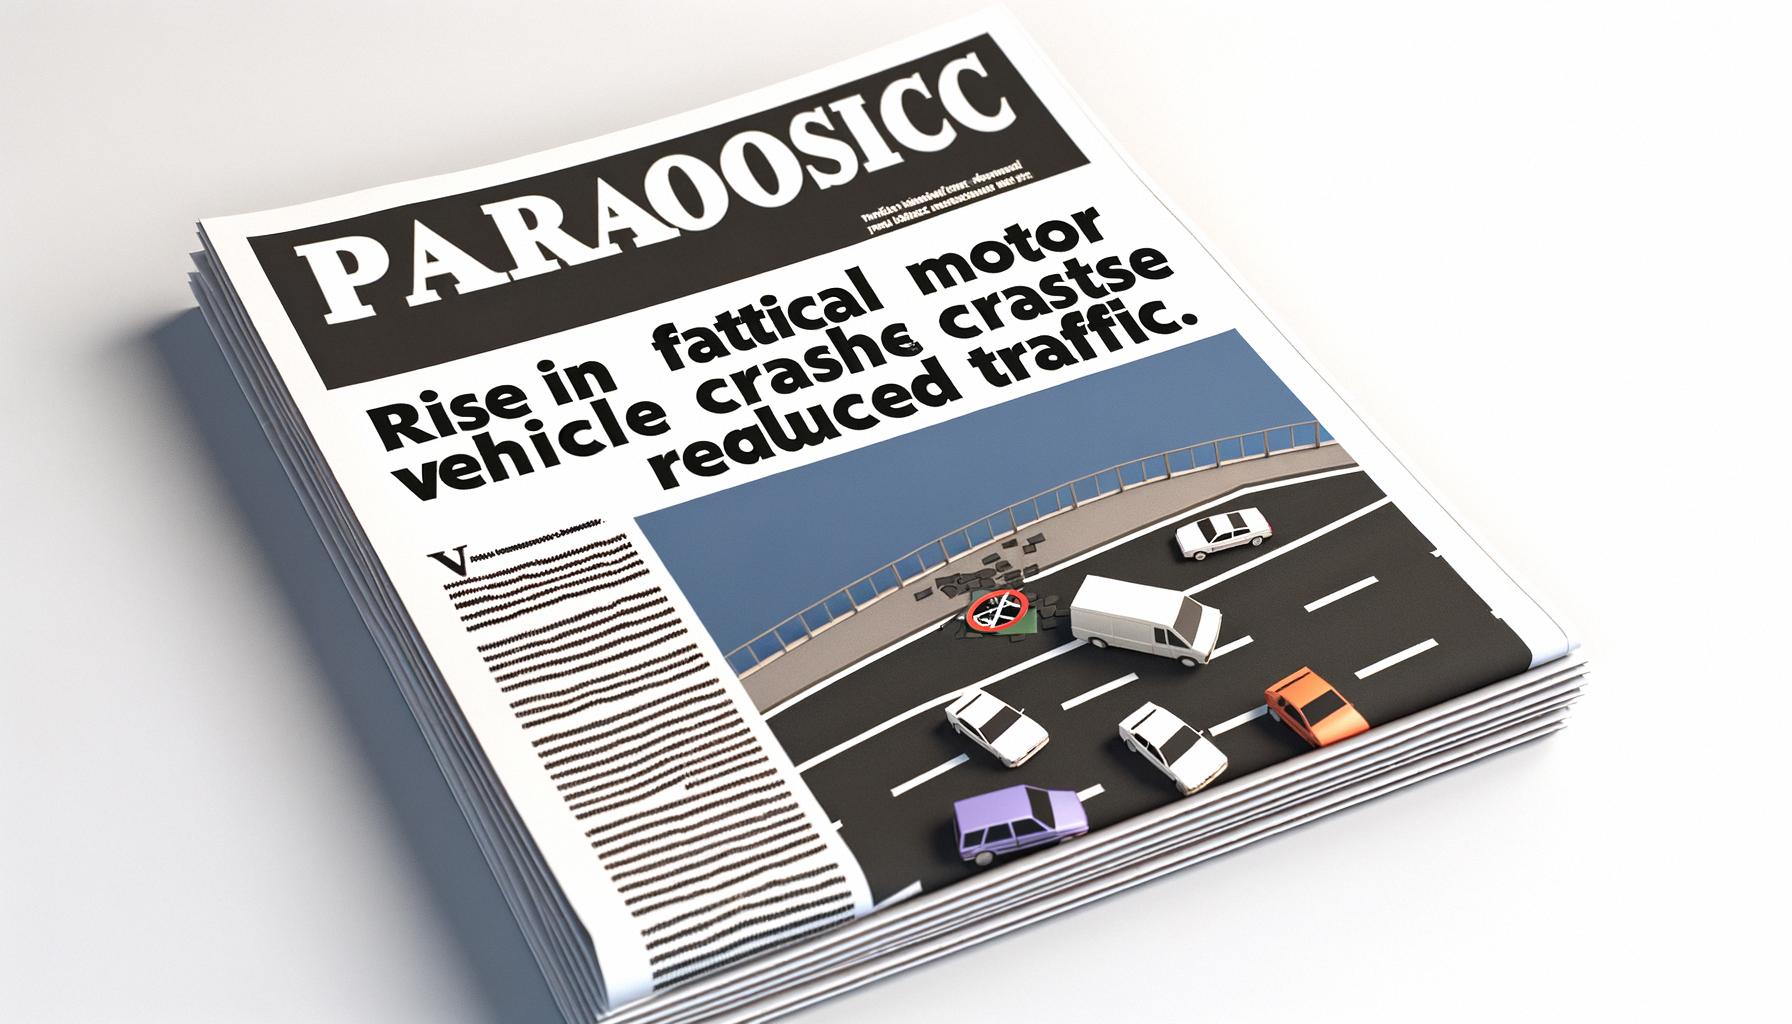 Rise in fatal motor vehicle crashes despite reduced traffic Balanced News